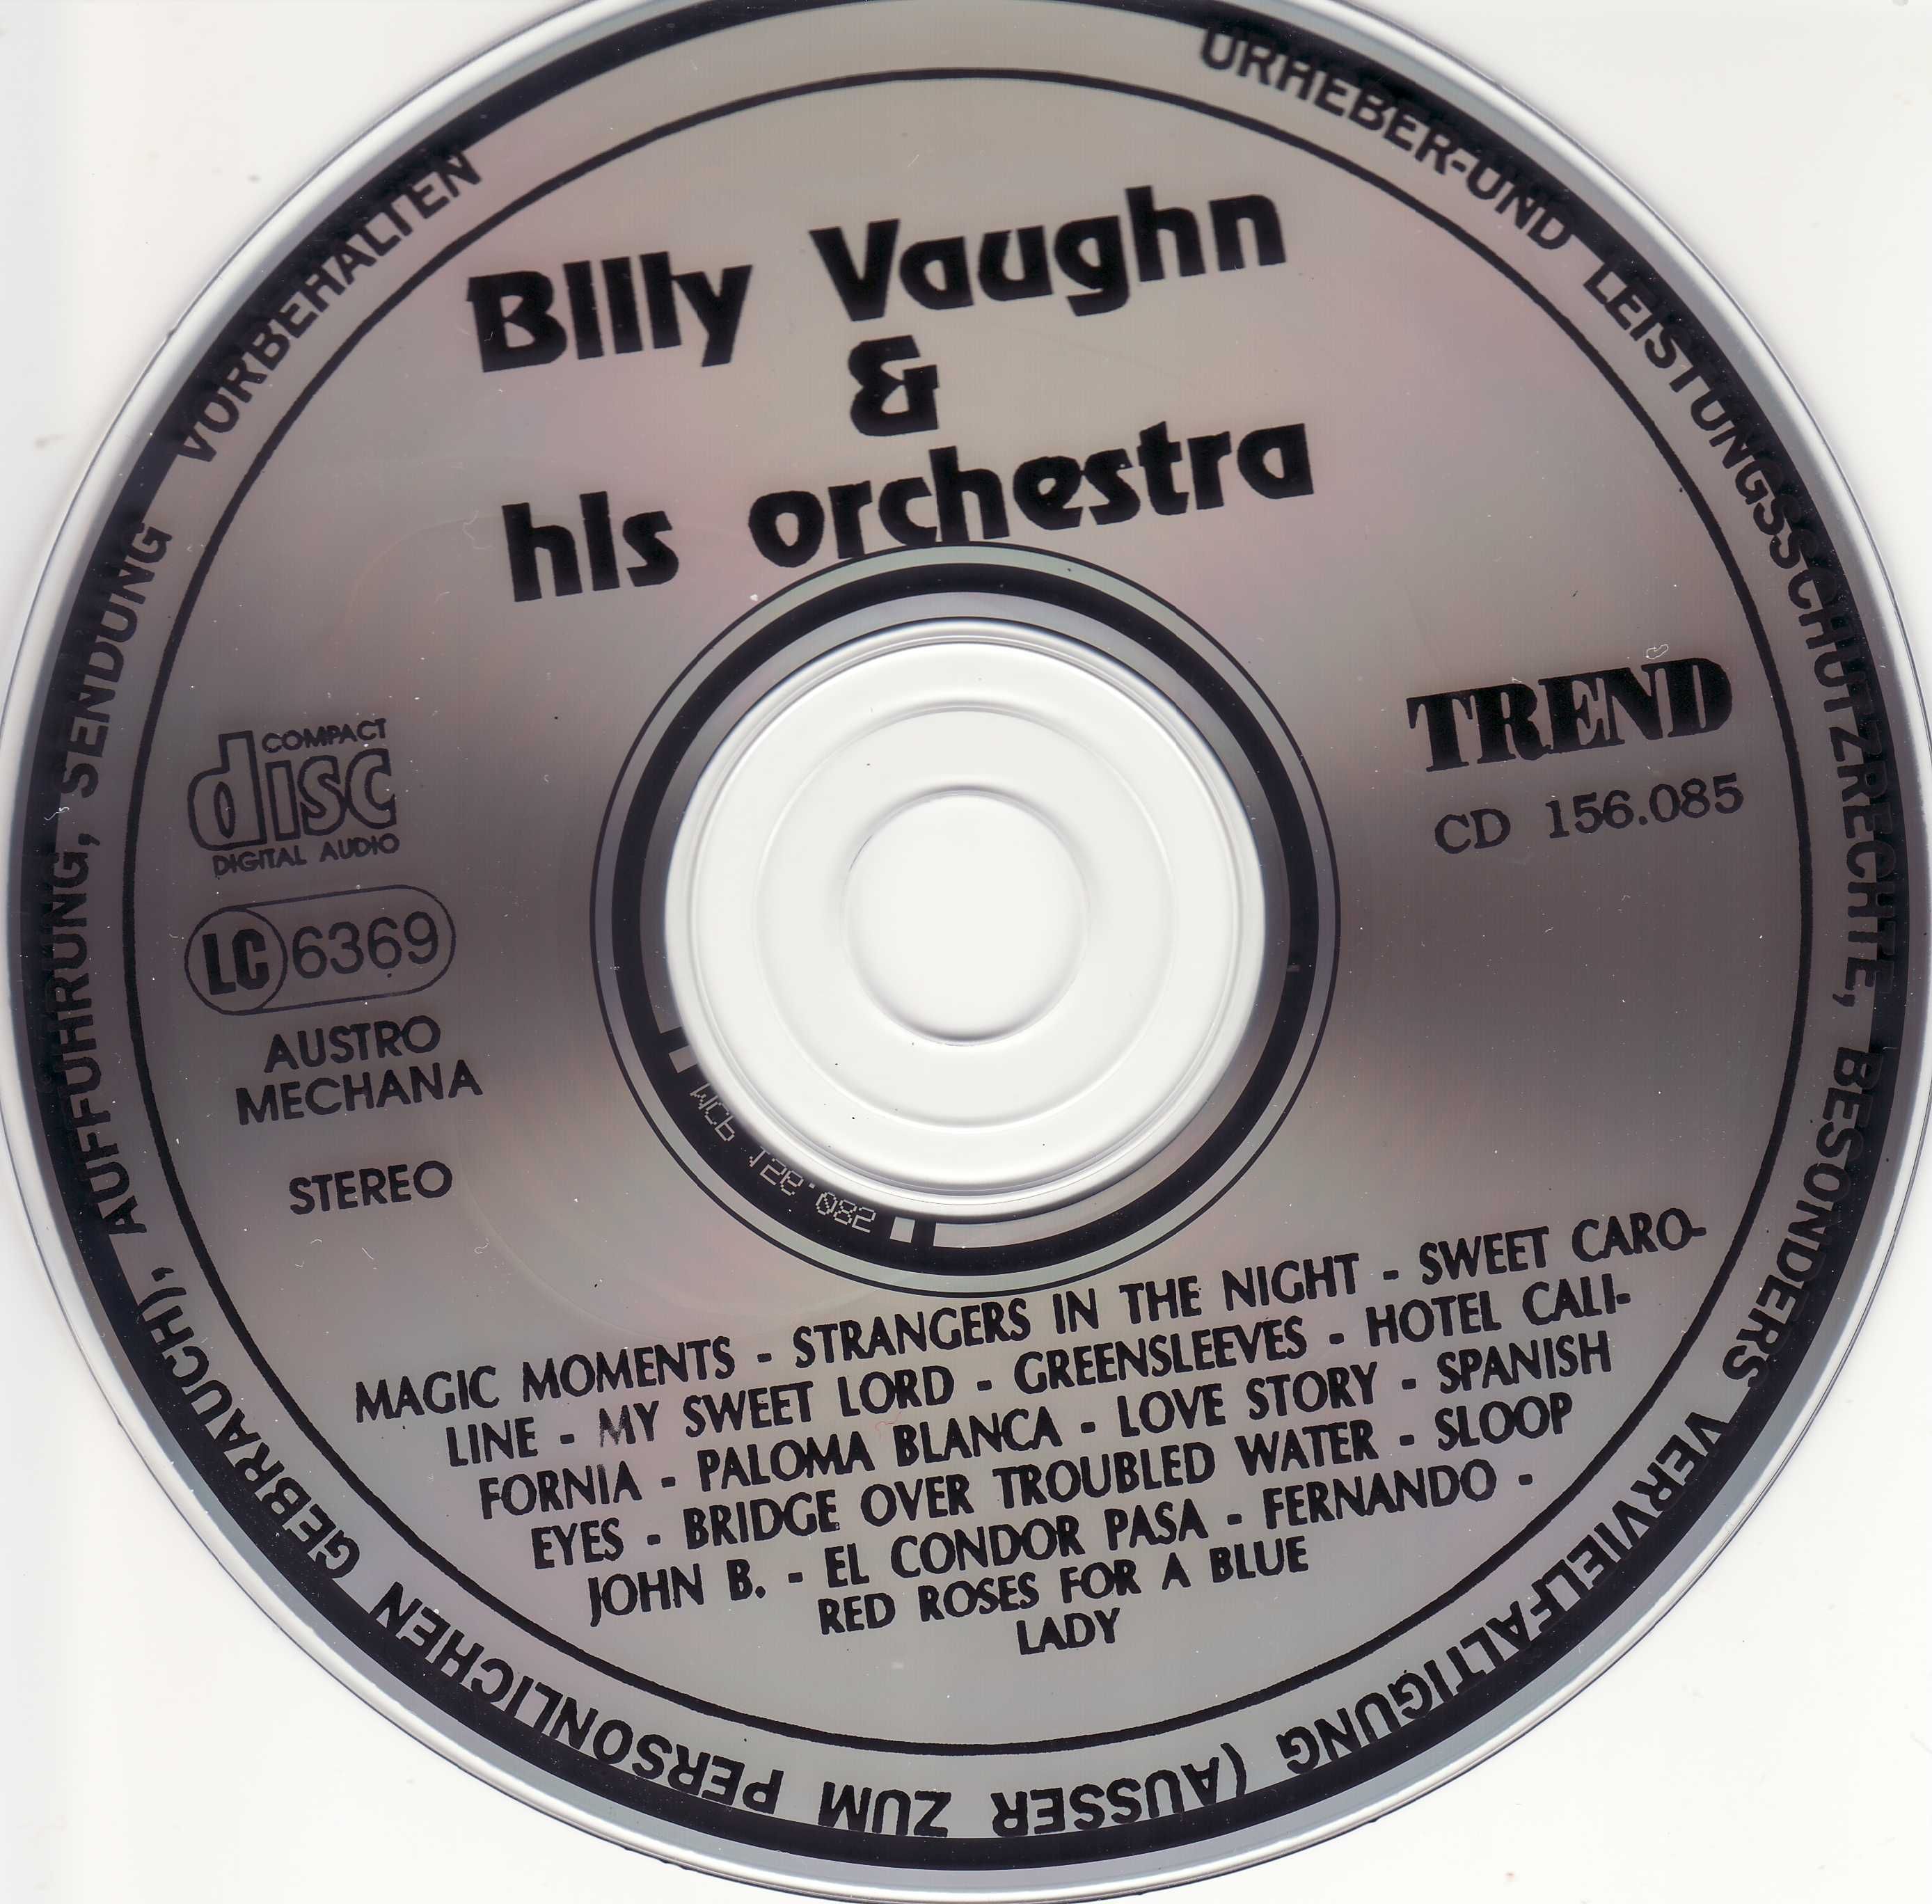 Billy Vaughn & His Orchestra - Spanish Eyes. Фірмові CD фирменные